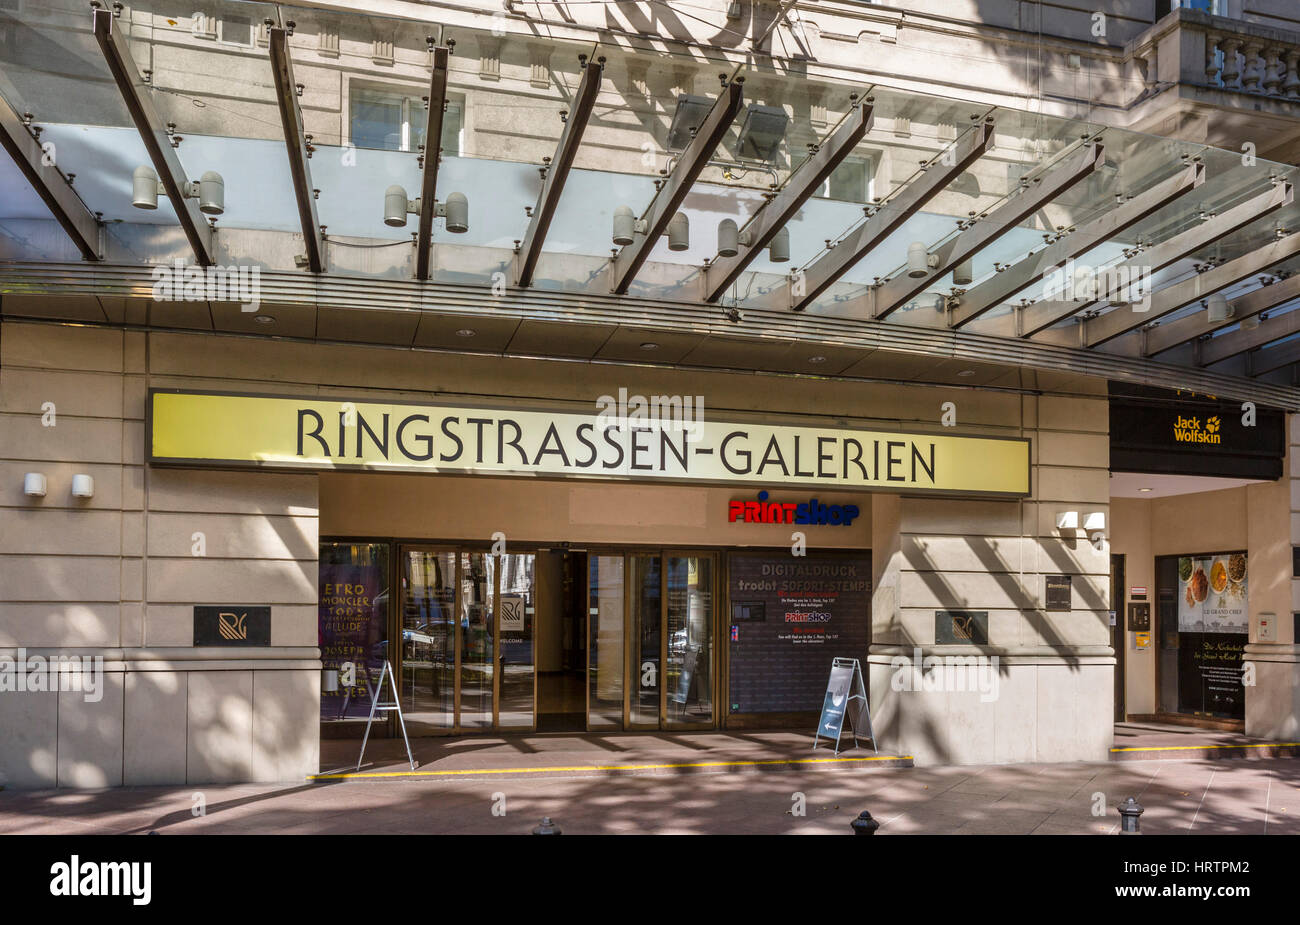 The Ringstrassen-Galerien shopping centre on the Ringstrasse (Ring Road), Kärntner Ring, Vienna, Austria Stock Photo